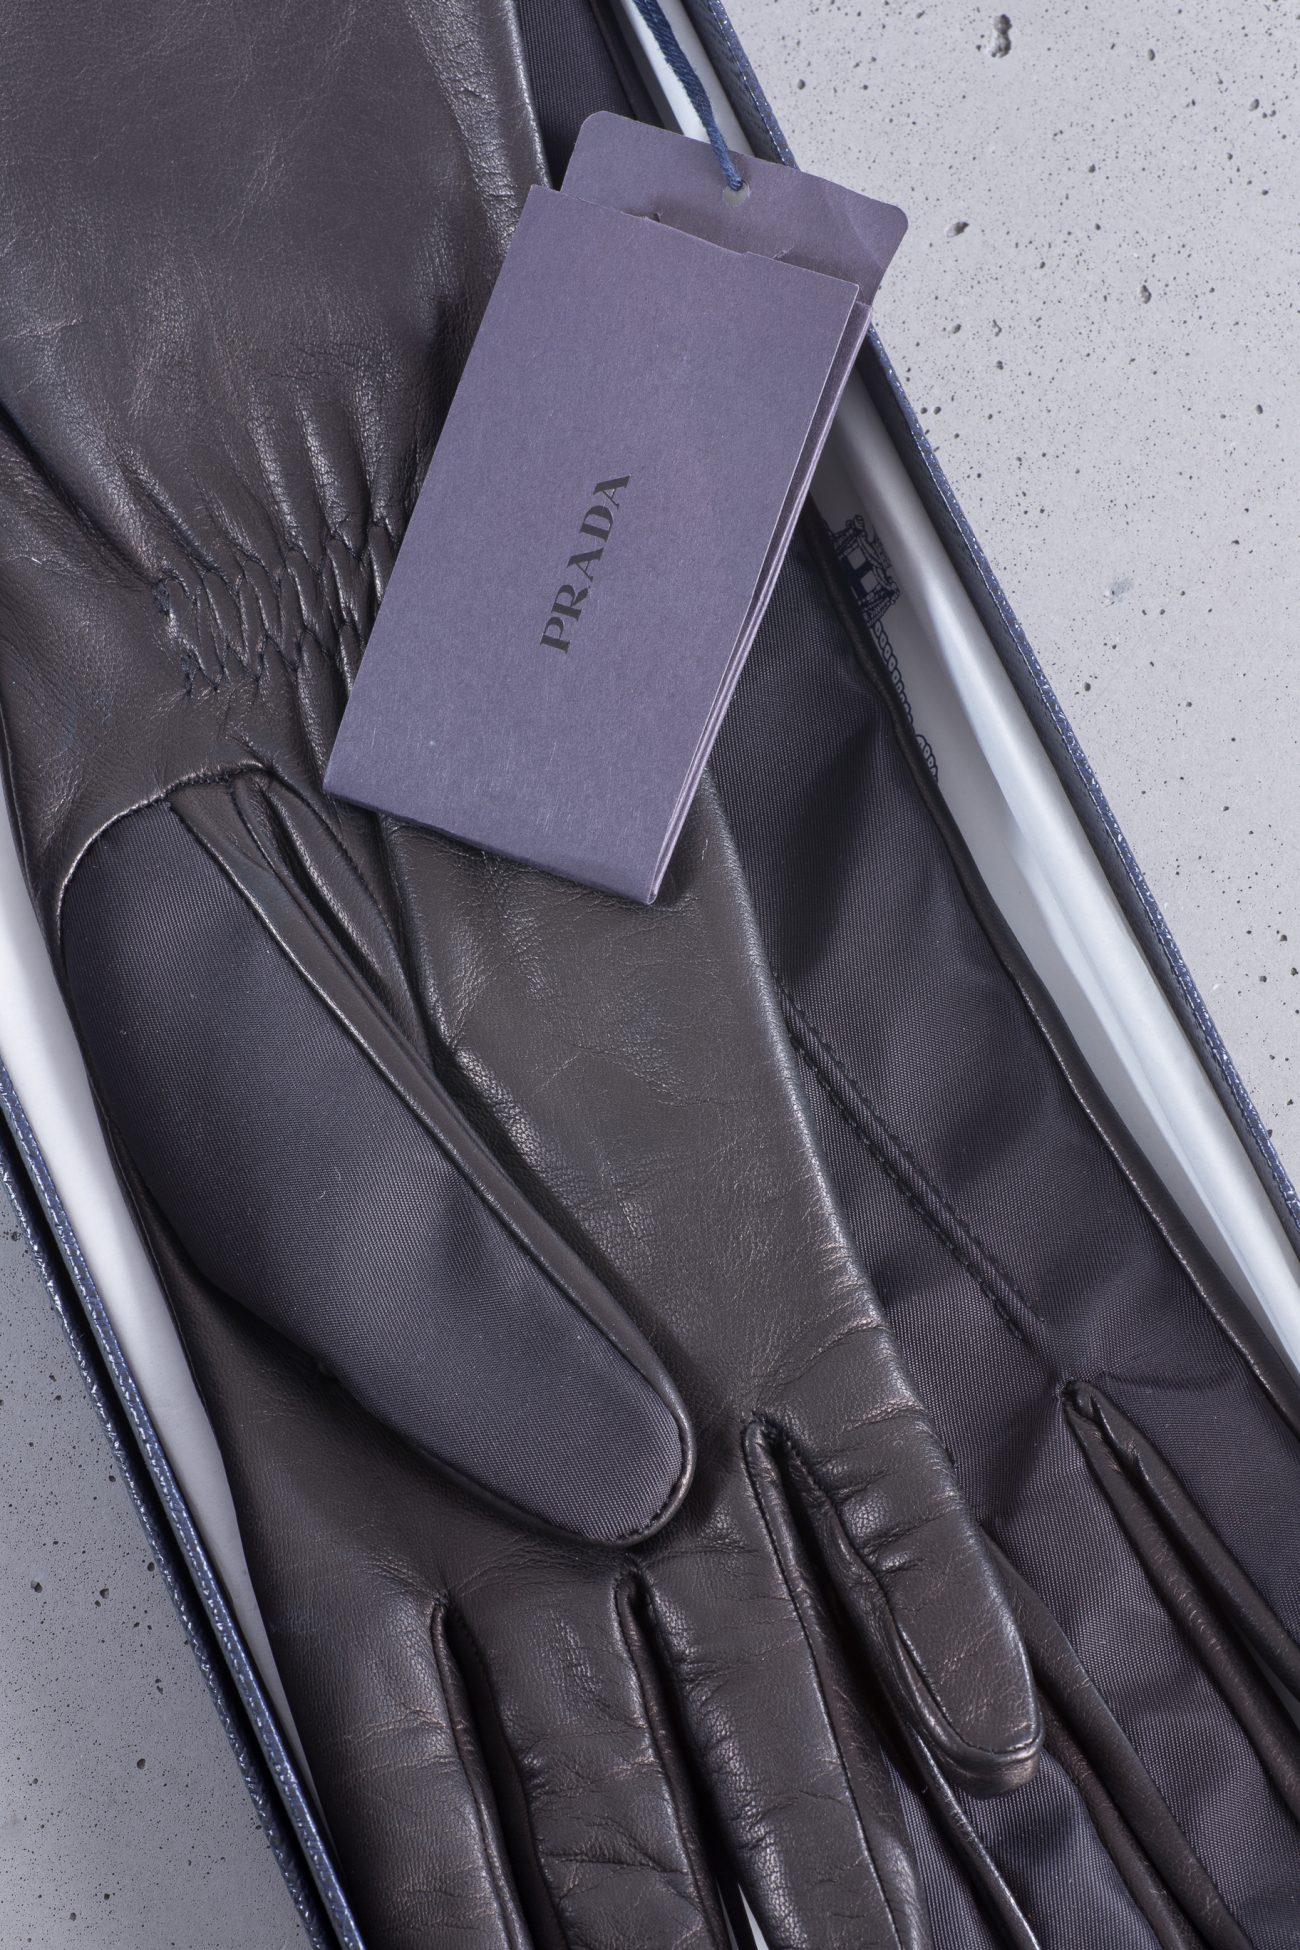 Prada nylon and leather long gloves